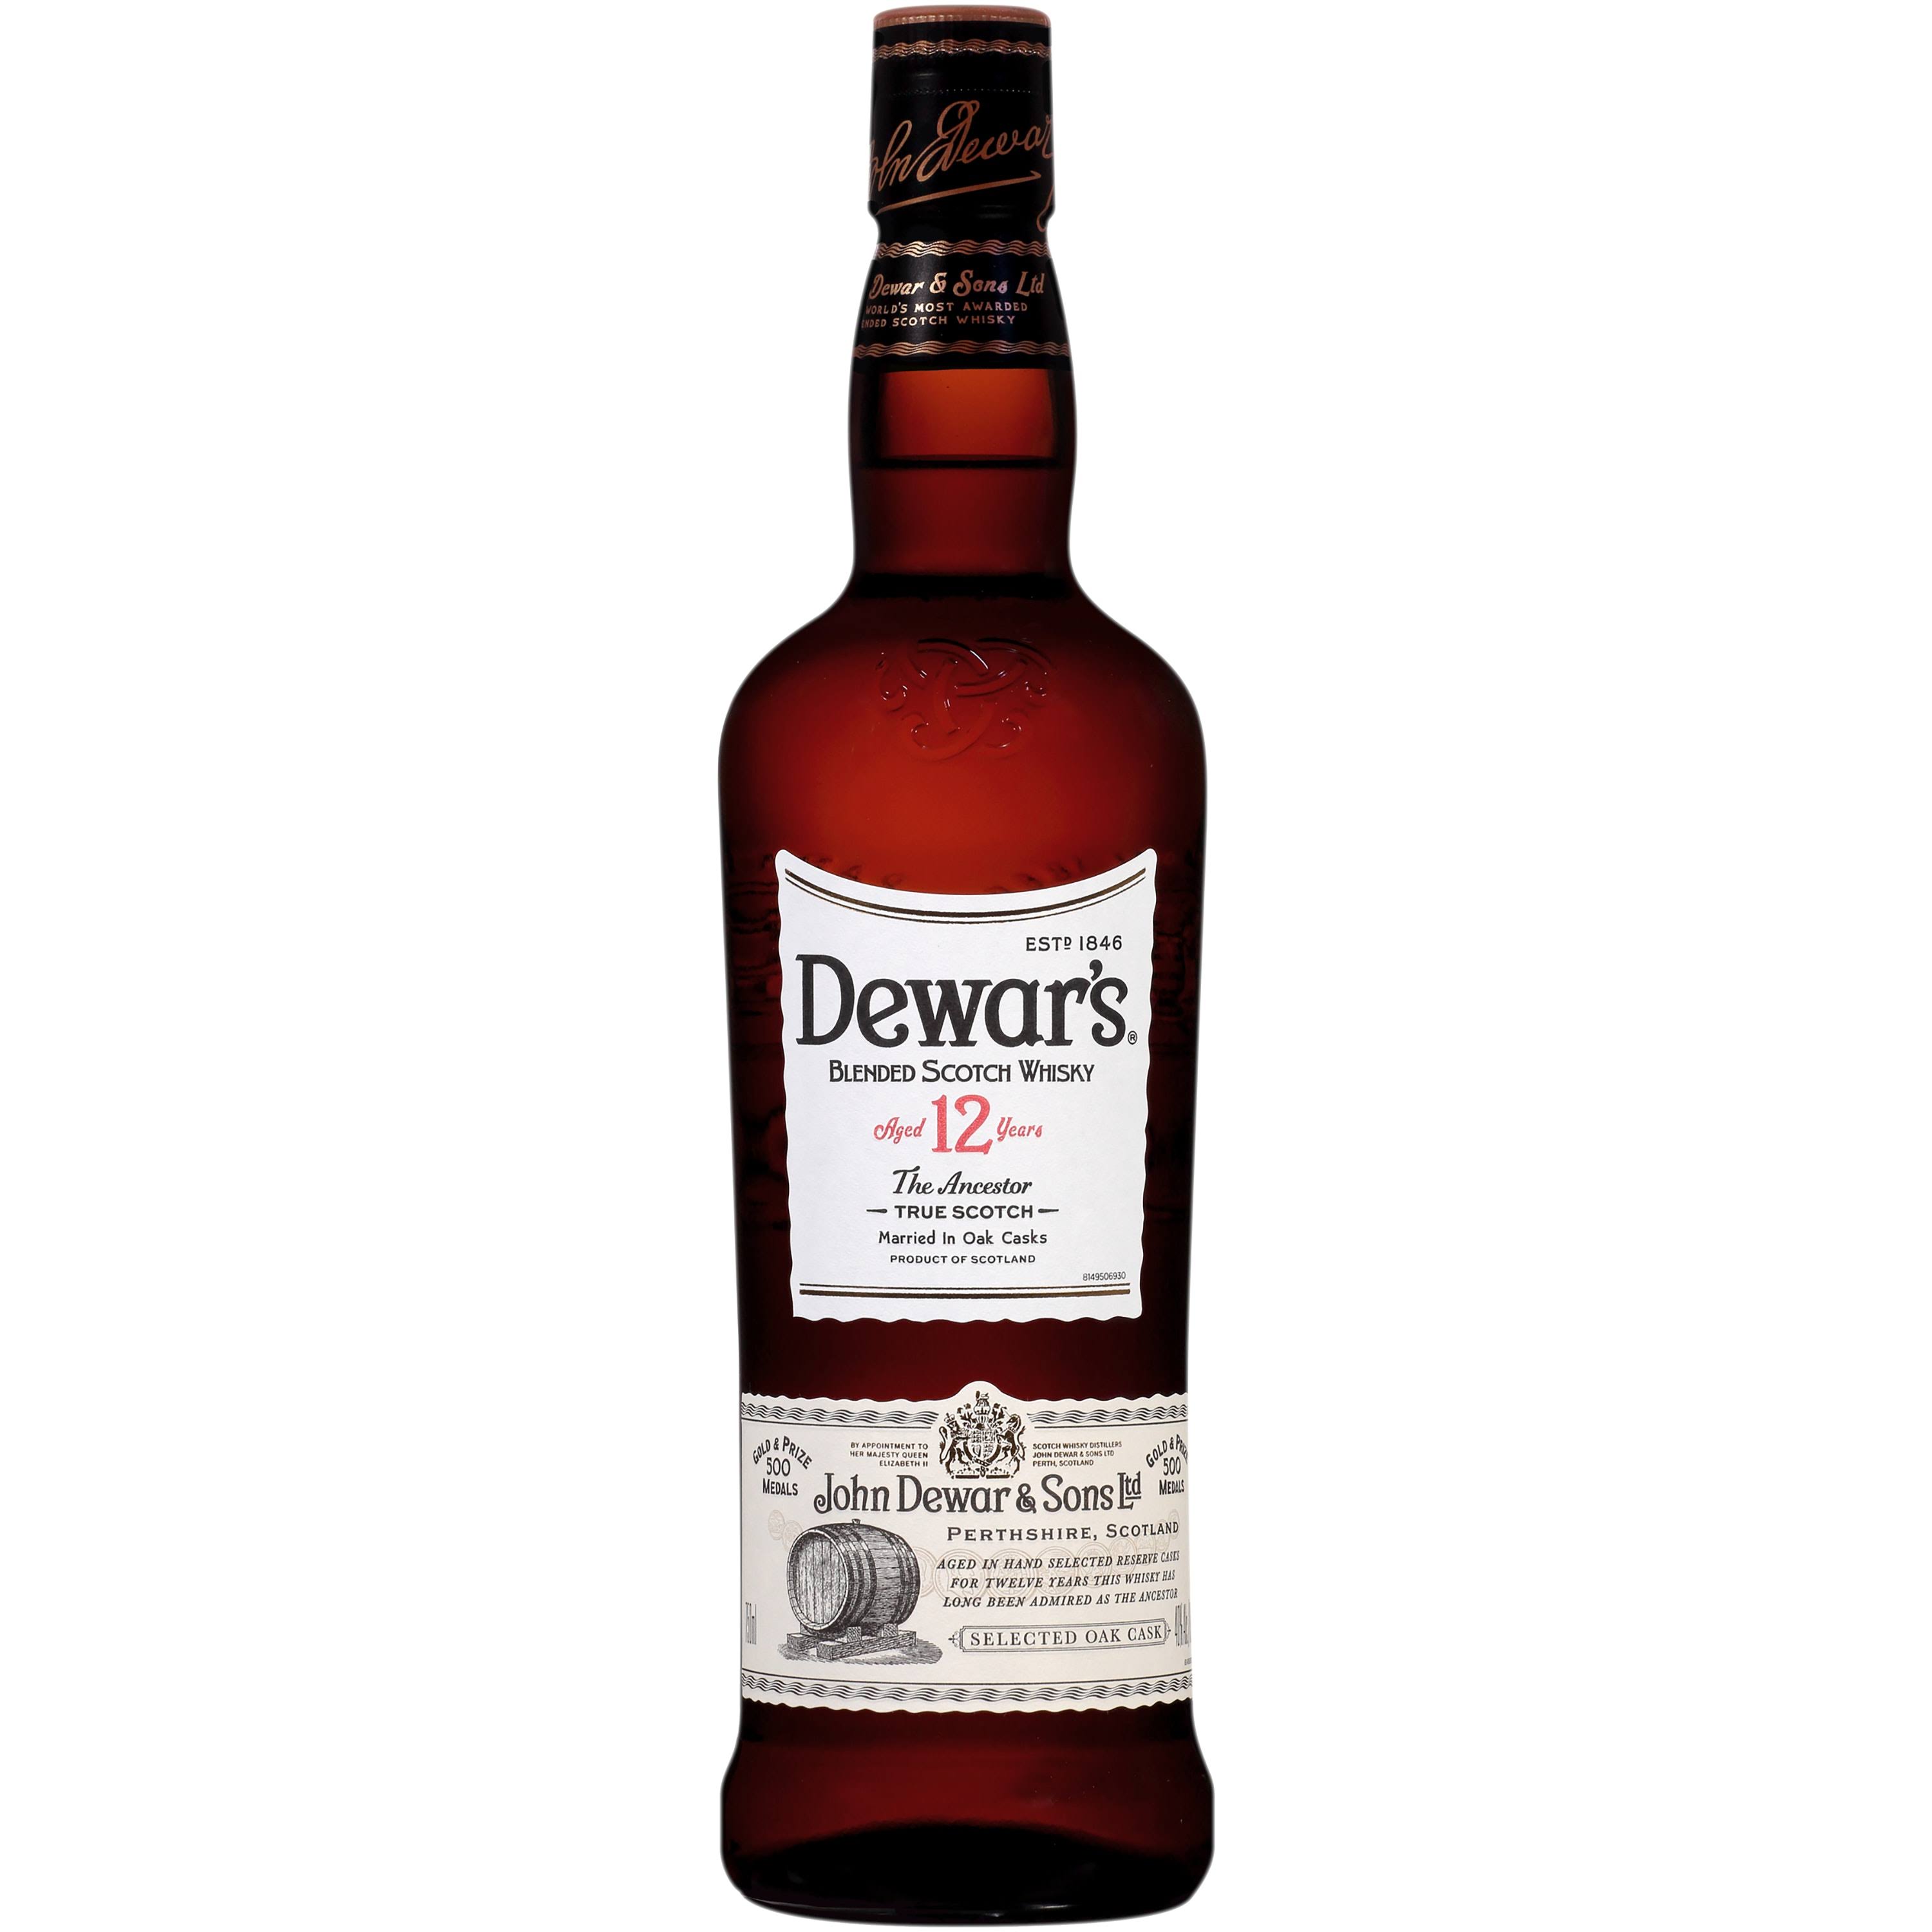 Dewars Scotch Whisky, Blended, The Ancestor - 750 ml